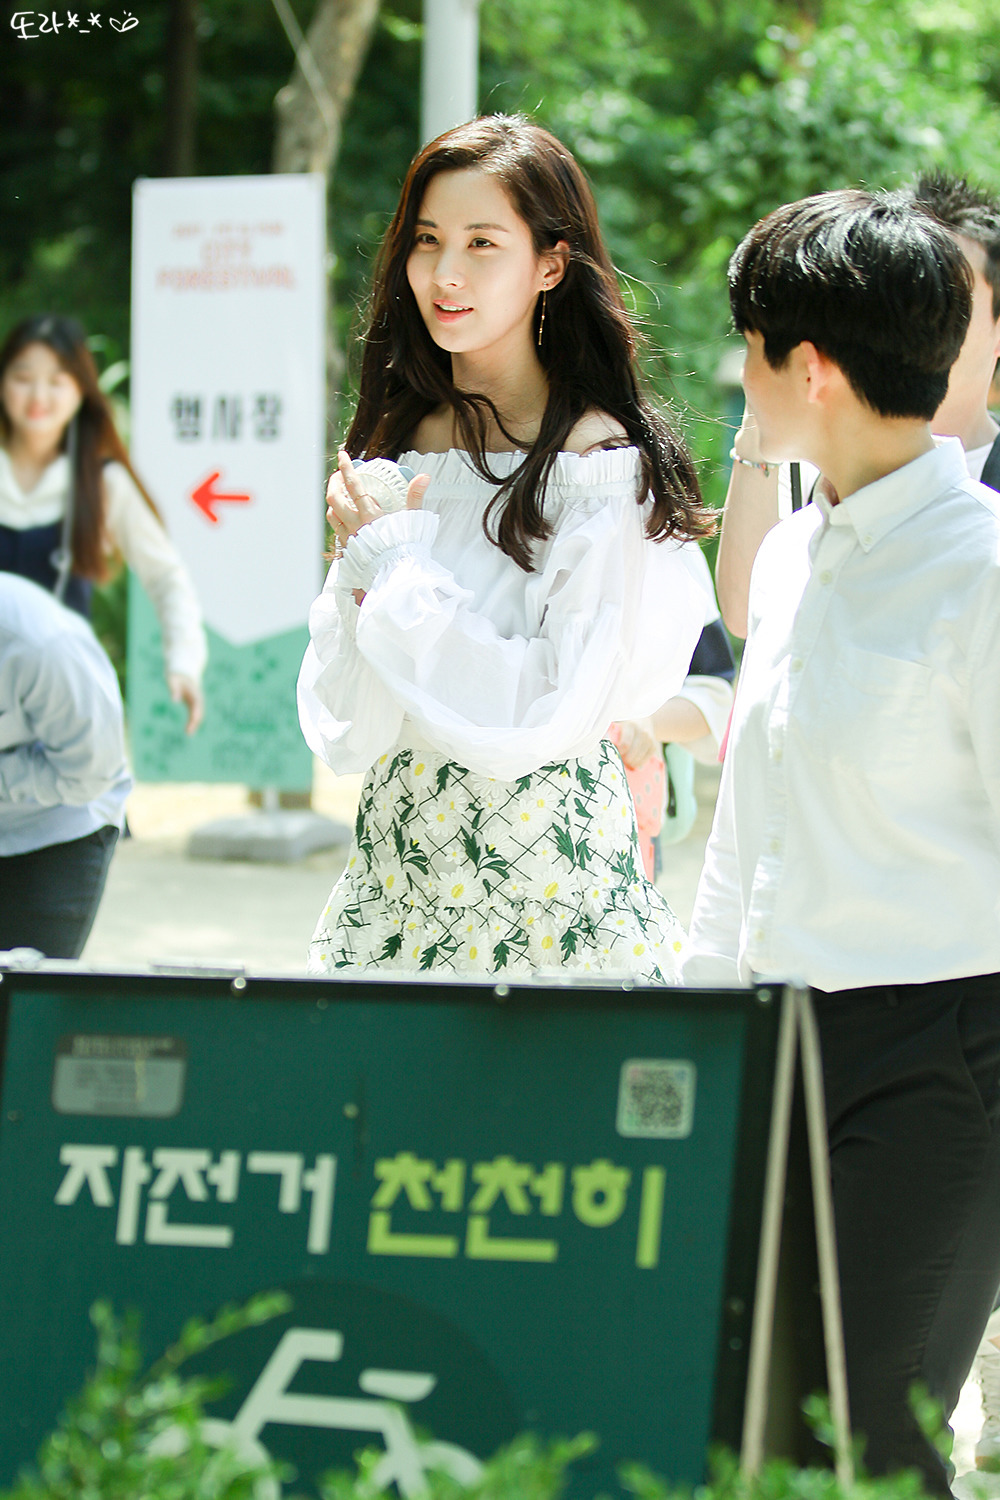  [PIC][03-06-2017]SeoHyun tham dự sự kiện “City Forestival - Maeil Duyou 'Confidence Diary'” vào chiều nay - Page 3 226D3C495937A620238C4F